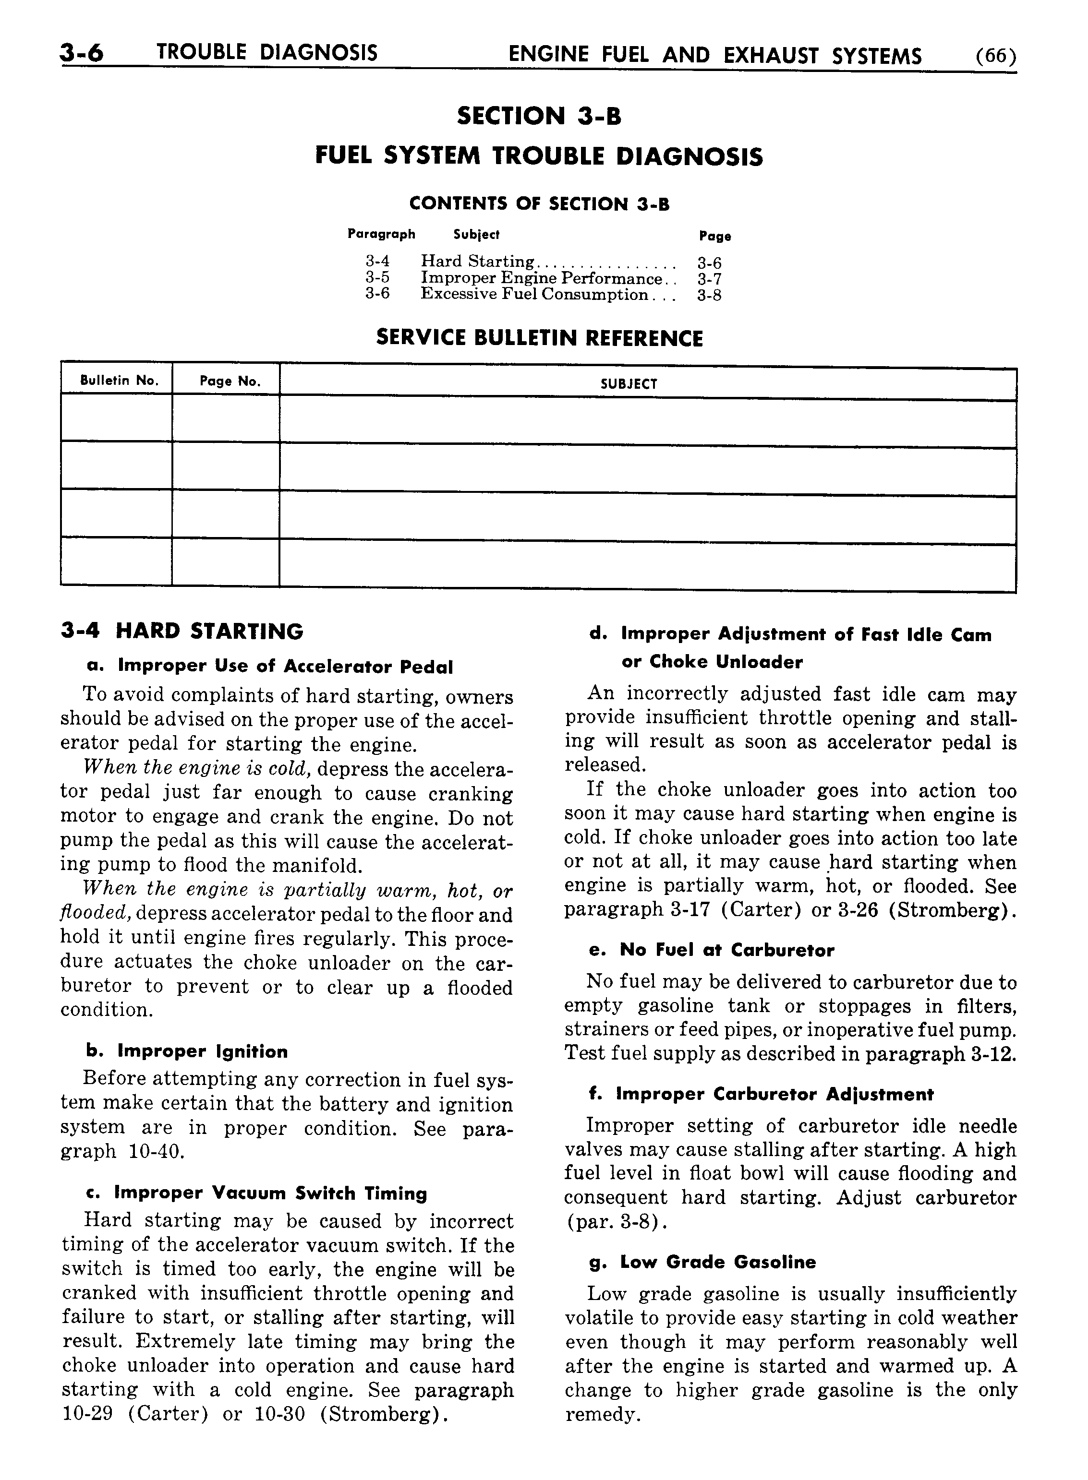 n_04 1954 Buick Shop Manual - Engine Fuel & Exhaust-006-006.jpg